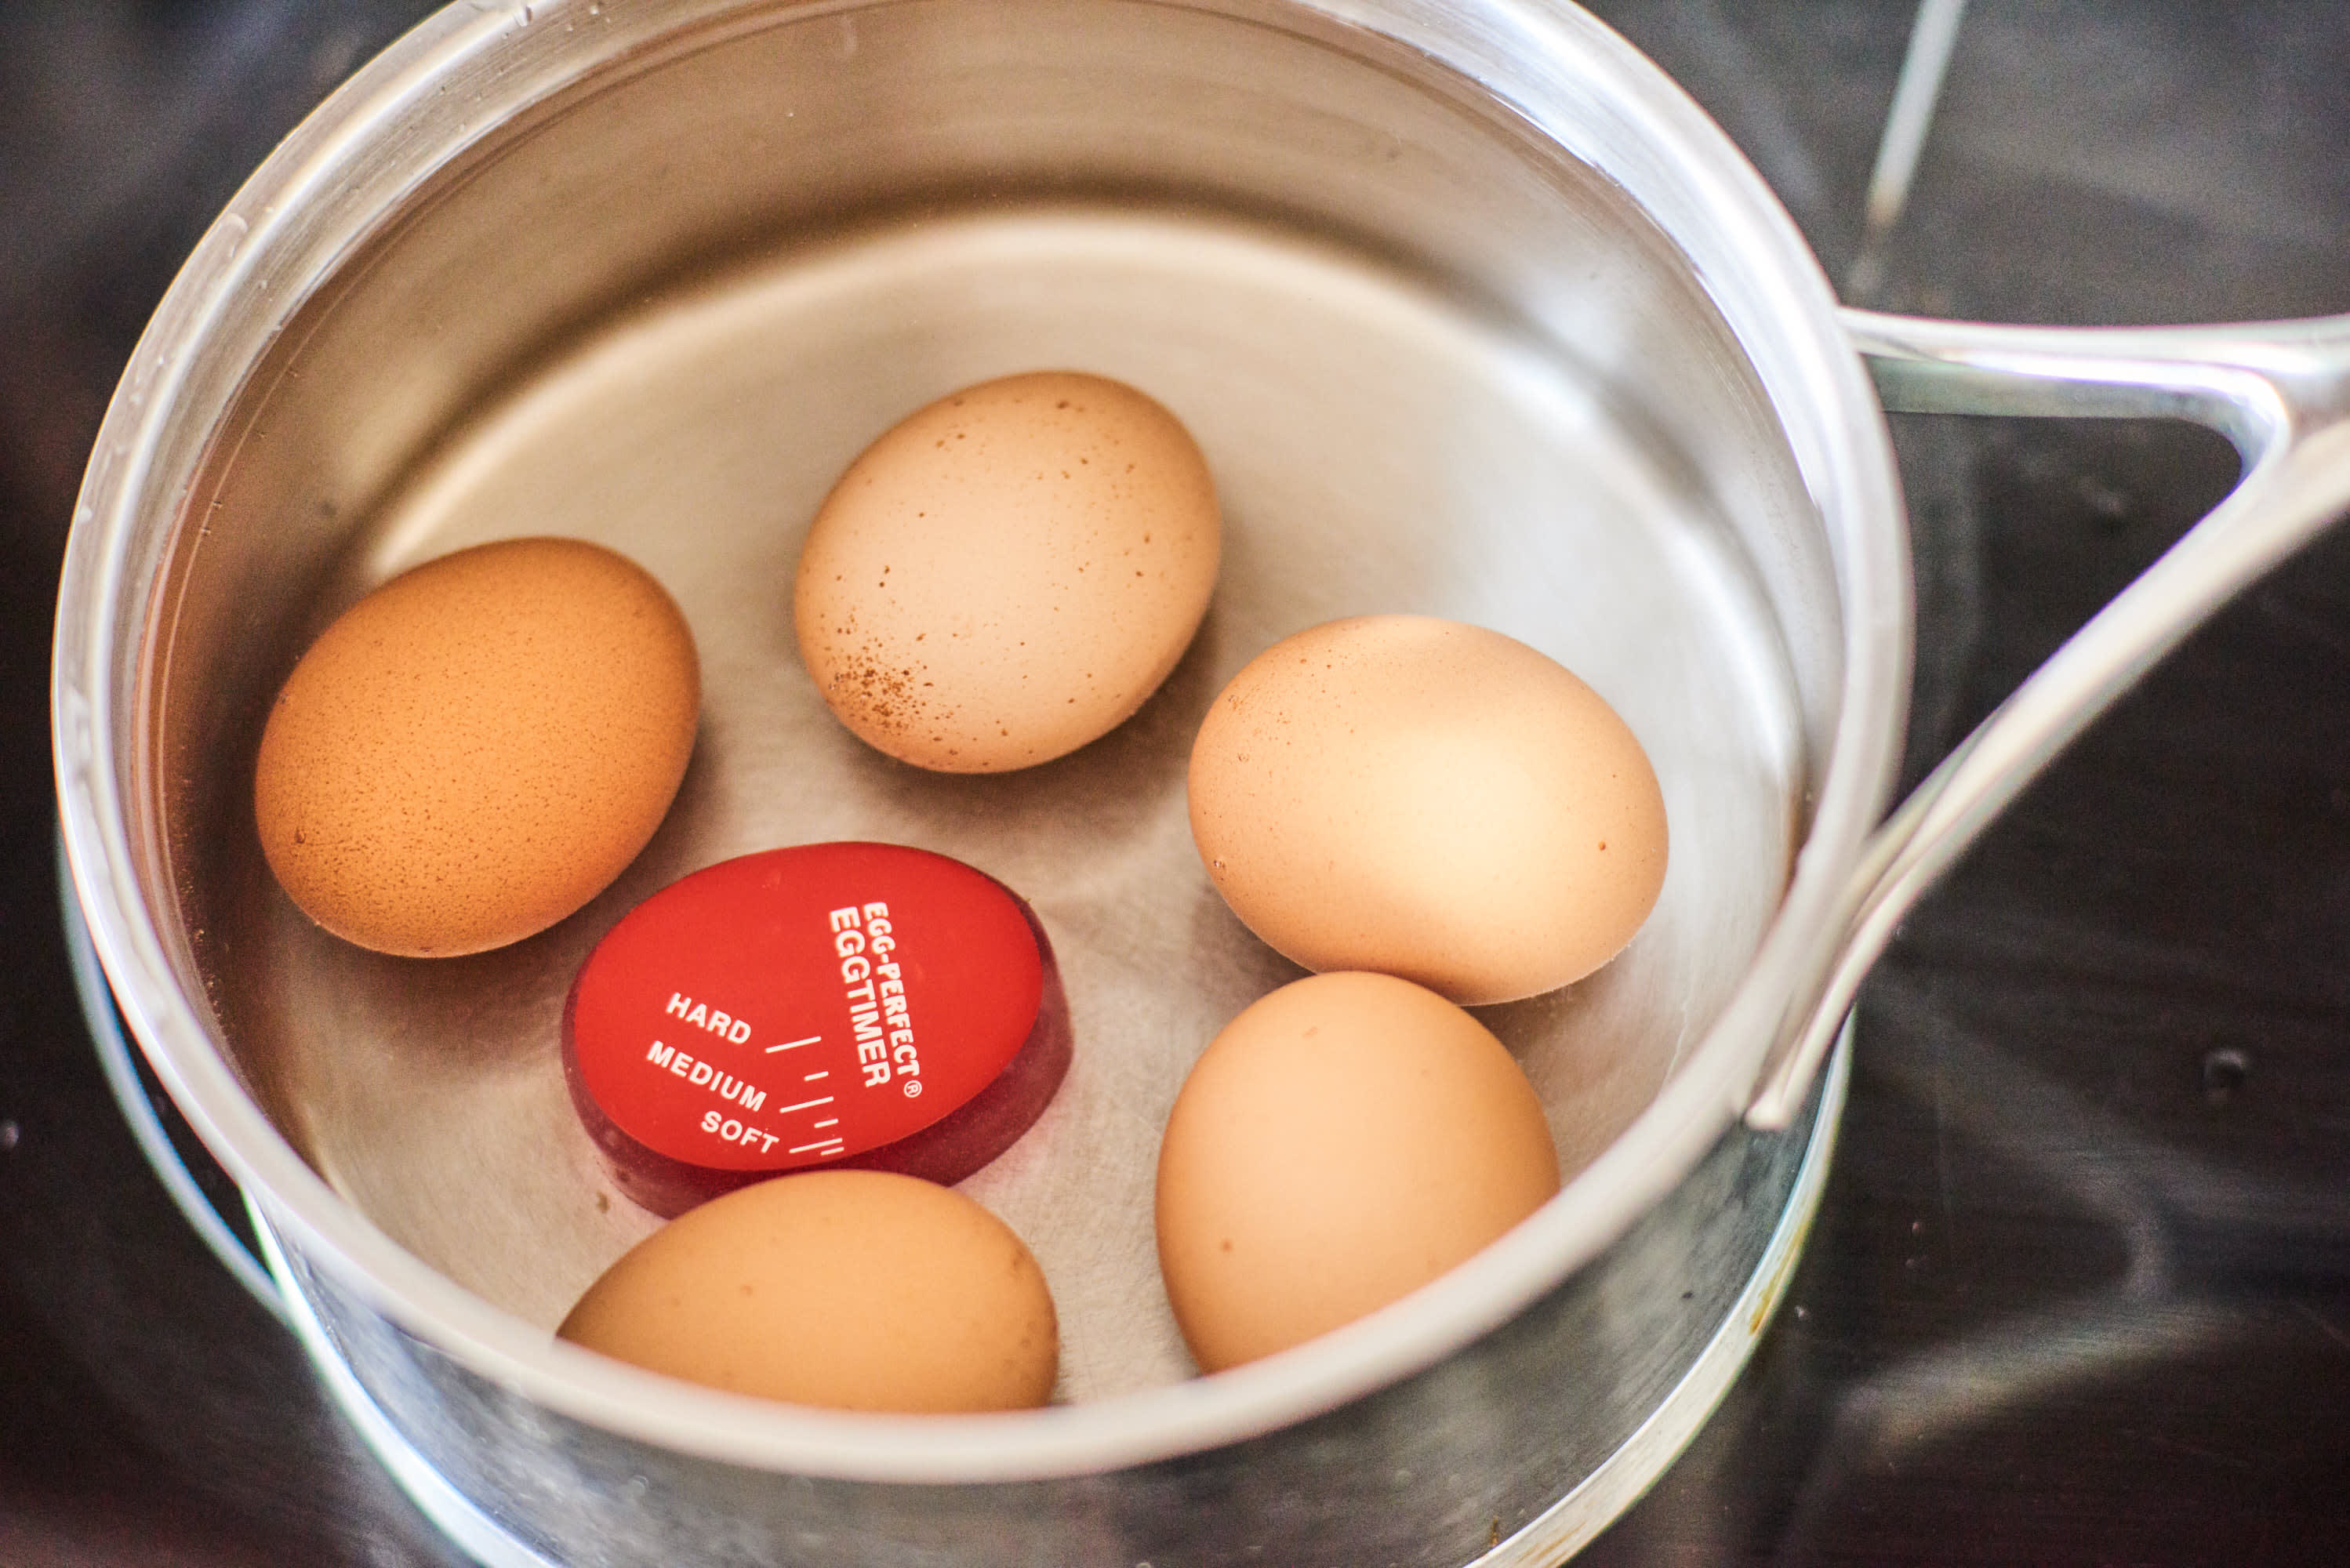  Norpro Egg Perfect Egg Timer: Home & Kitchen